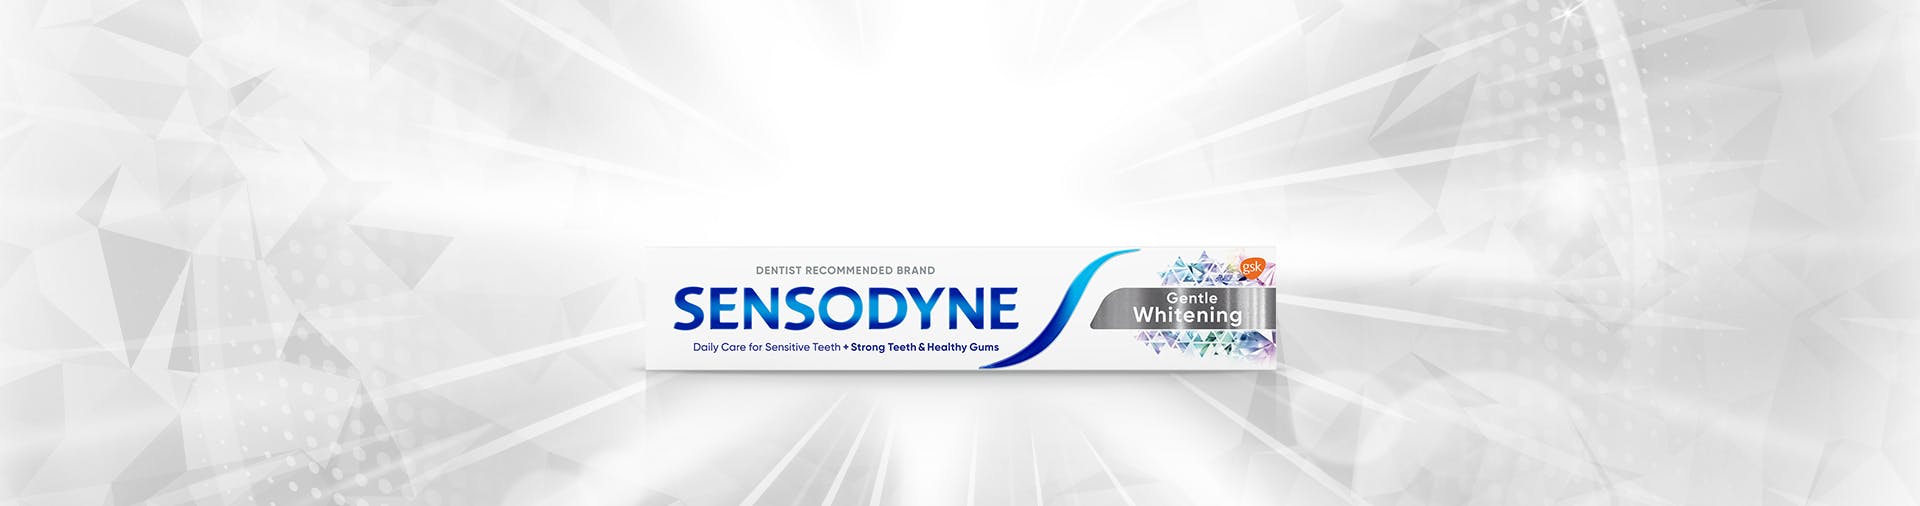 Sensodyne Extra Whitening campaign banner